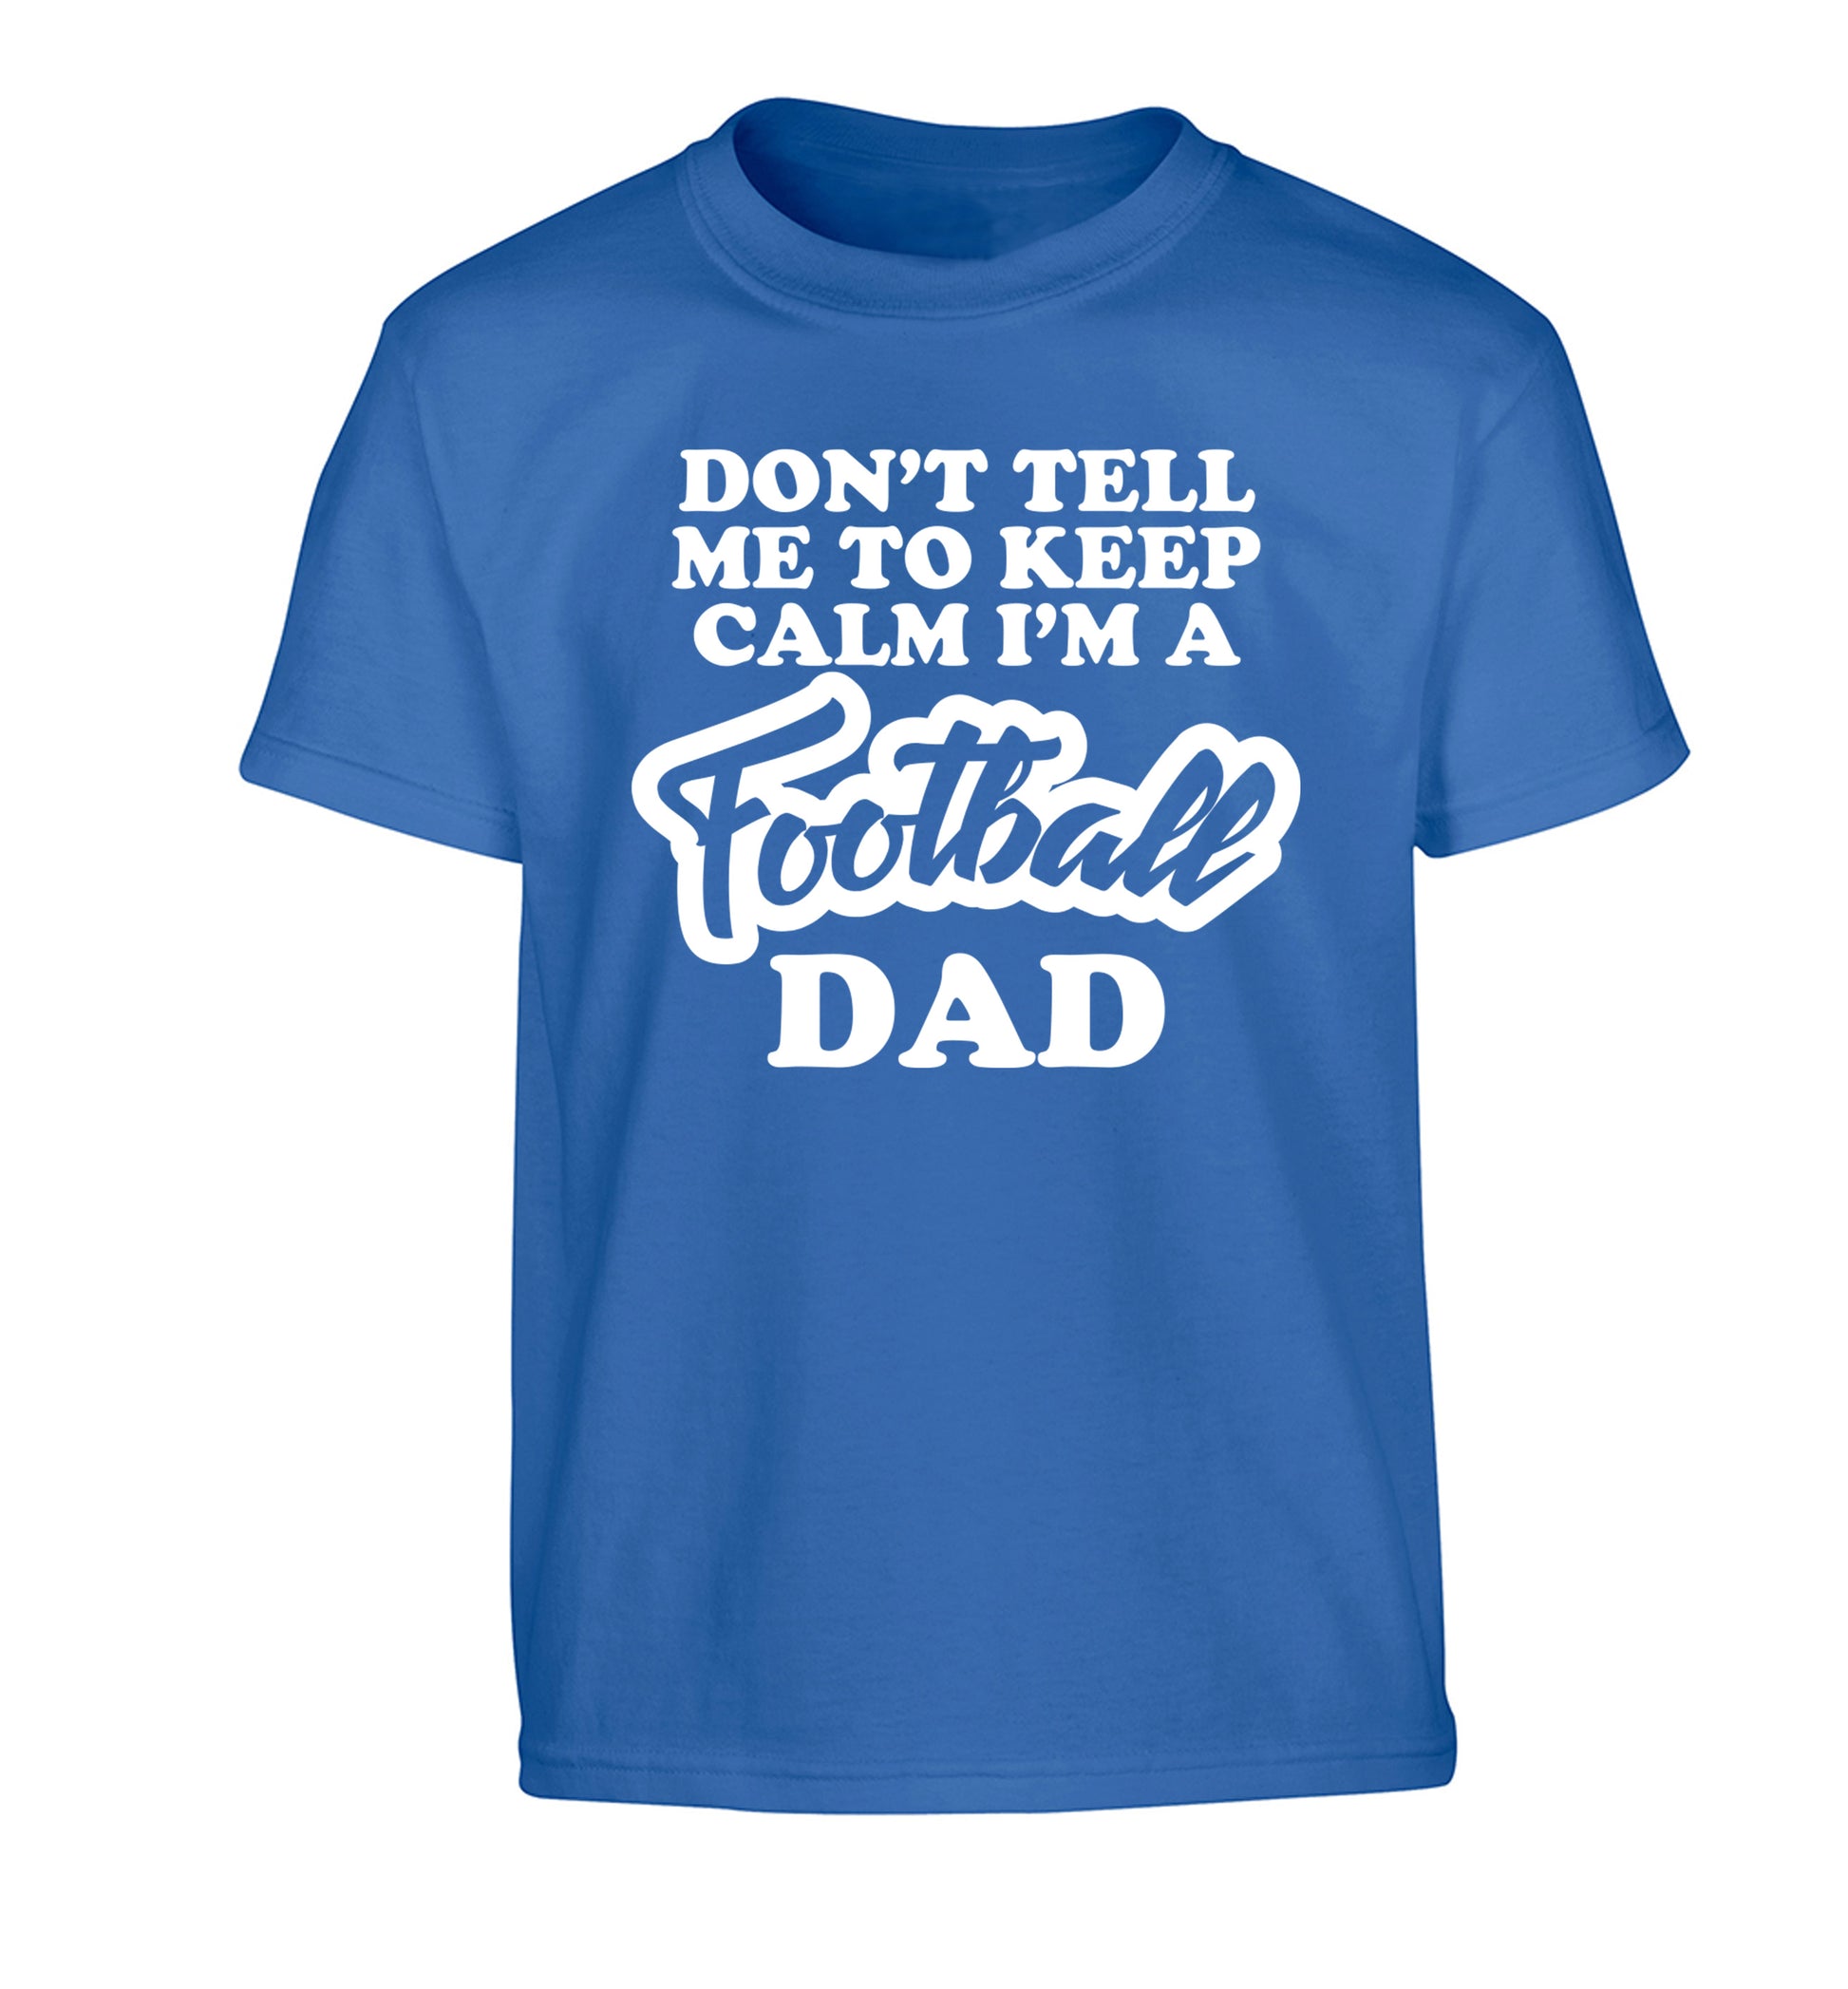 Don't tell me to keep calm I'm a football grandad Children's blue Tshirt 12-14 Years